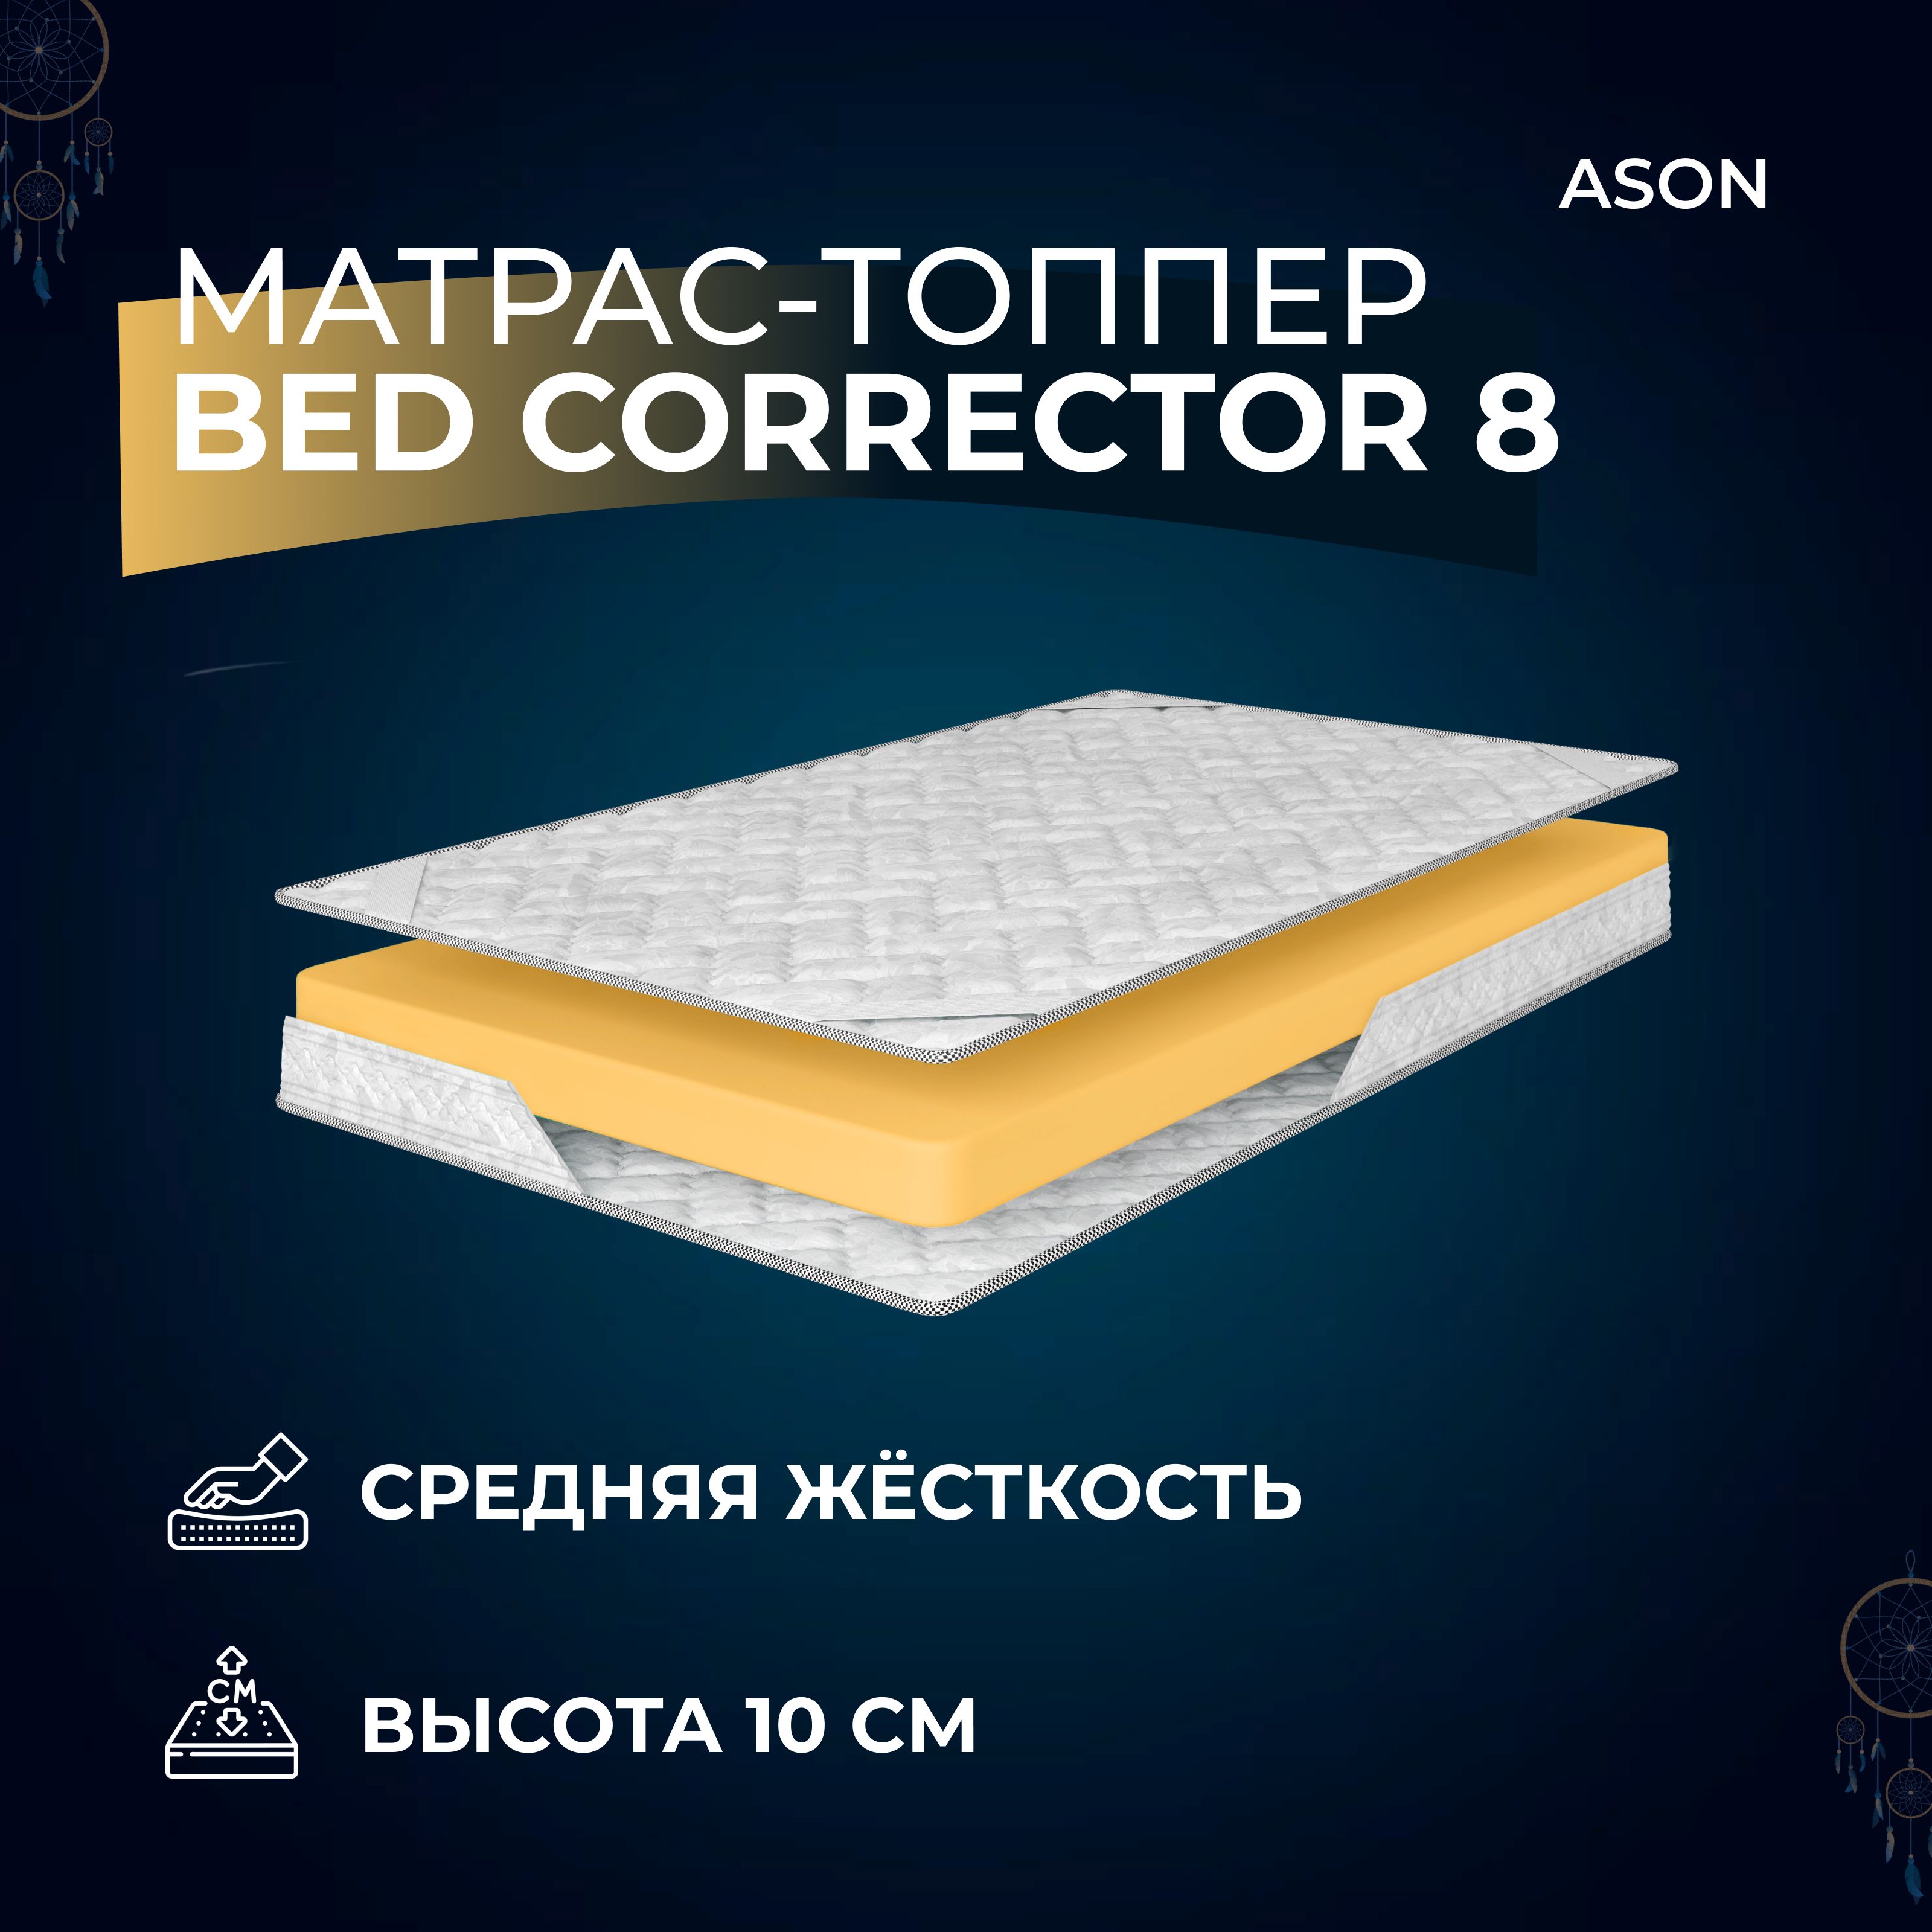 Матрас-топпер 70х200 Ason, Bed corrector 8